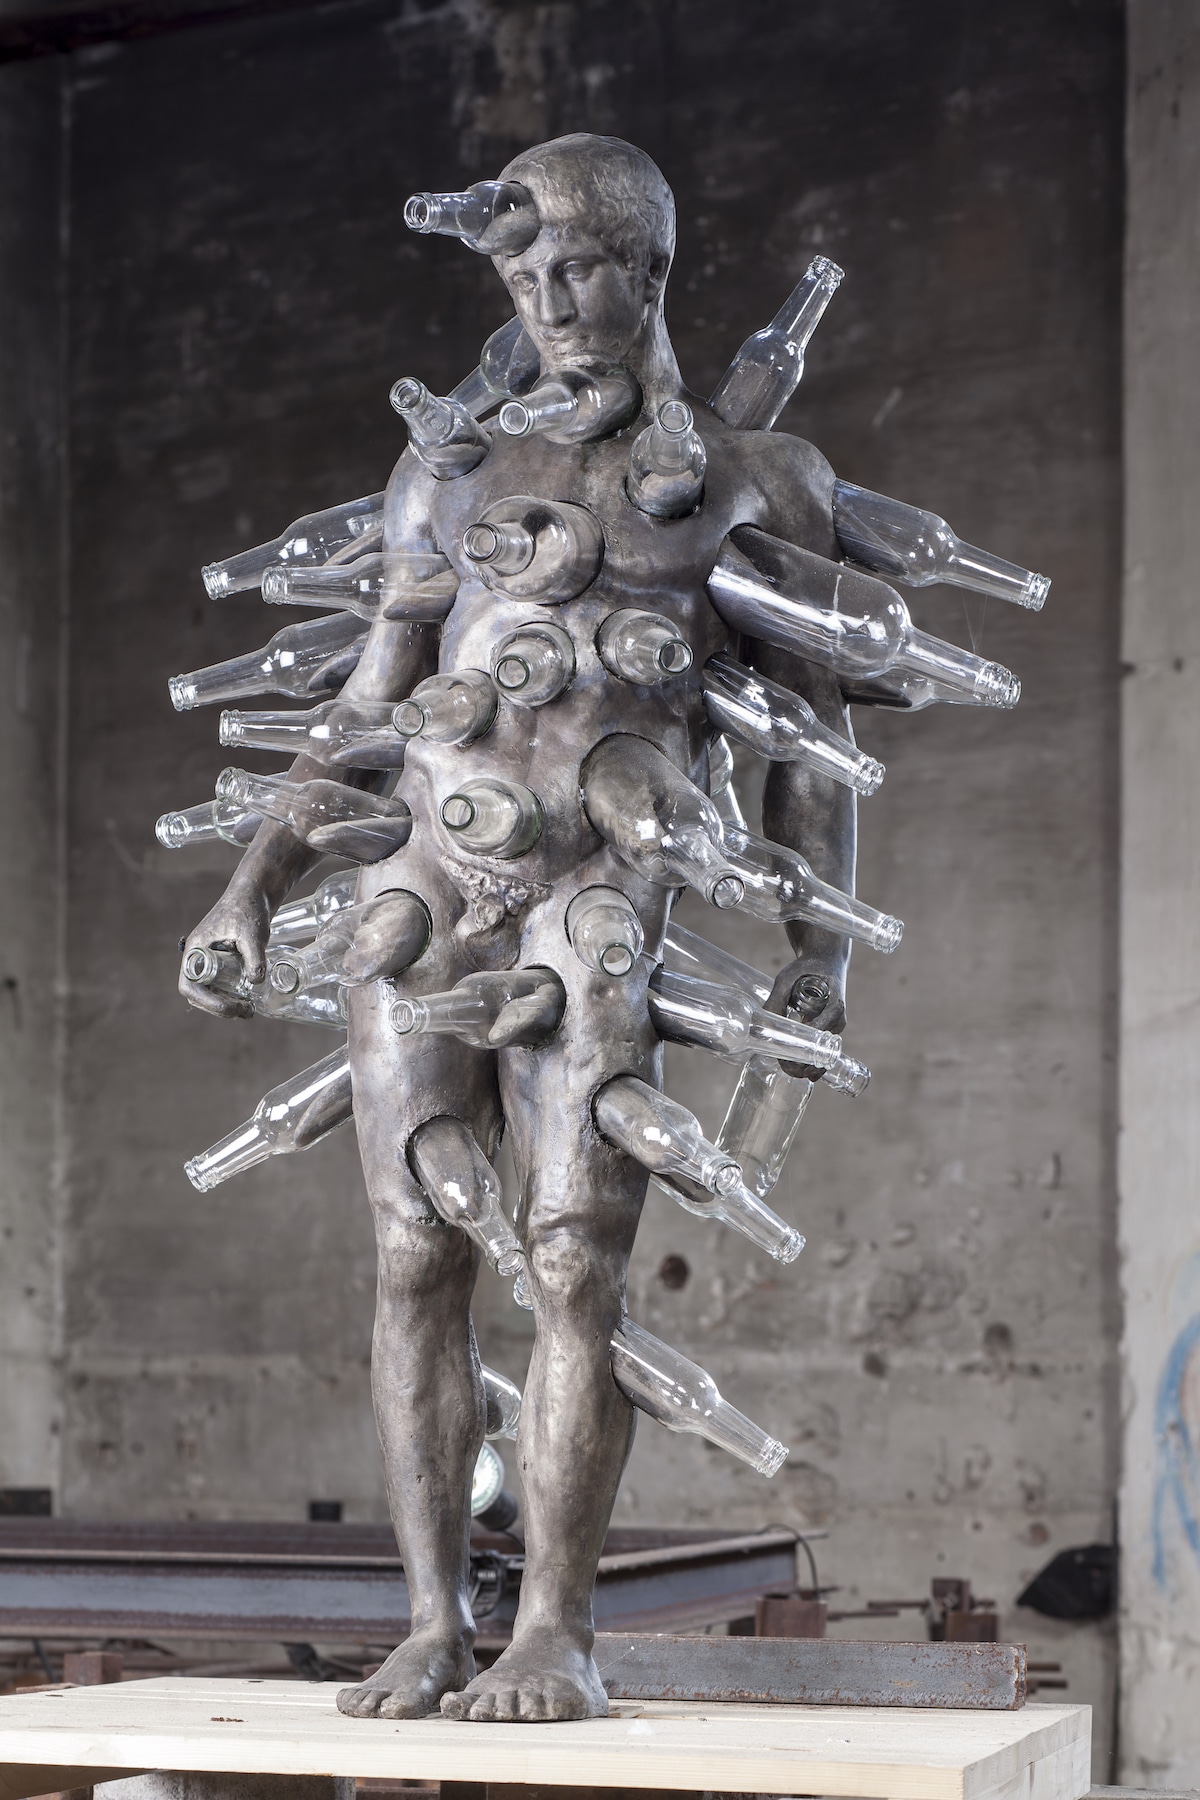 Conceptual Sculpture by Thomas Lerooy